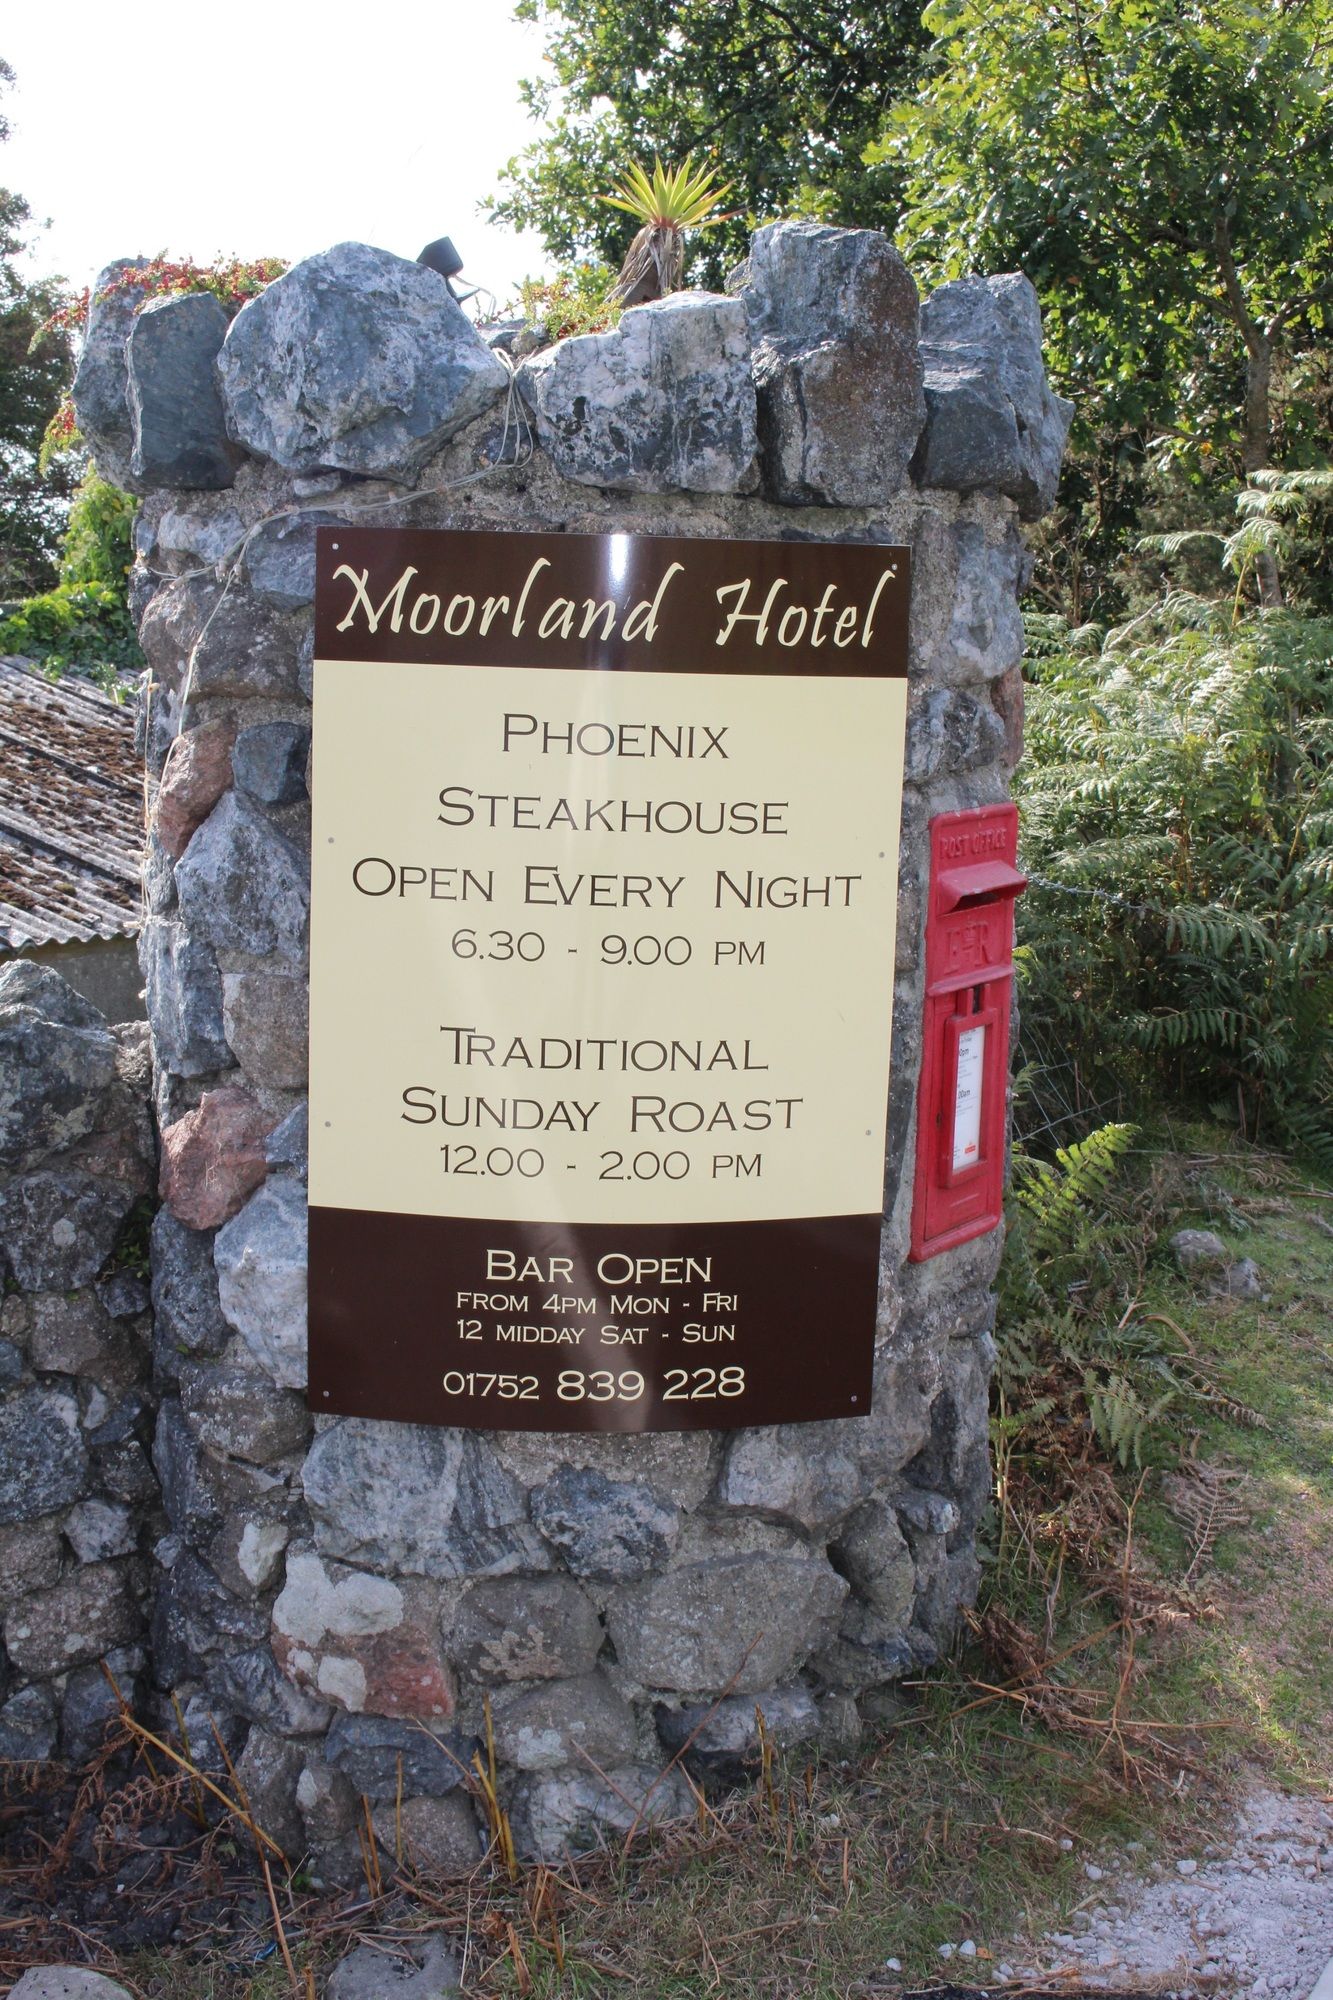 The Moorland Hotel